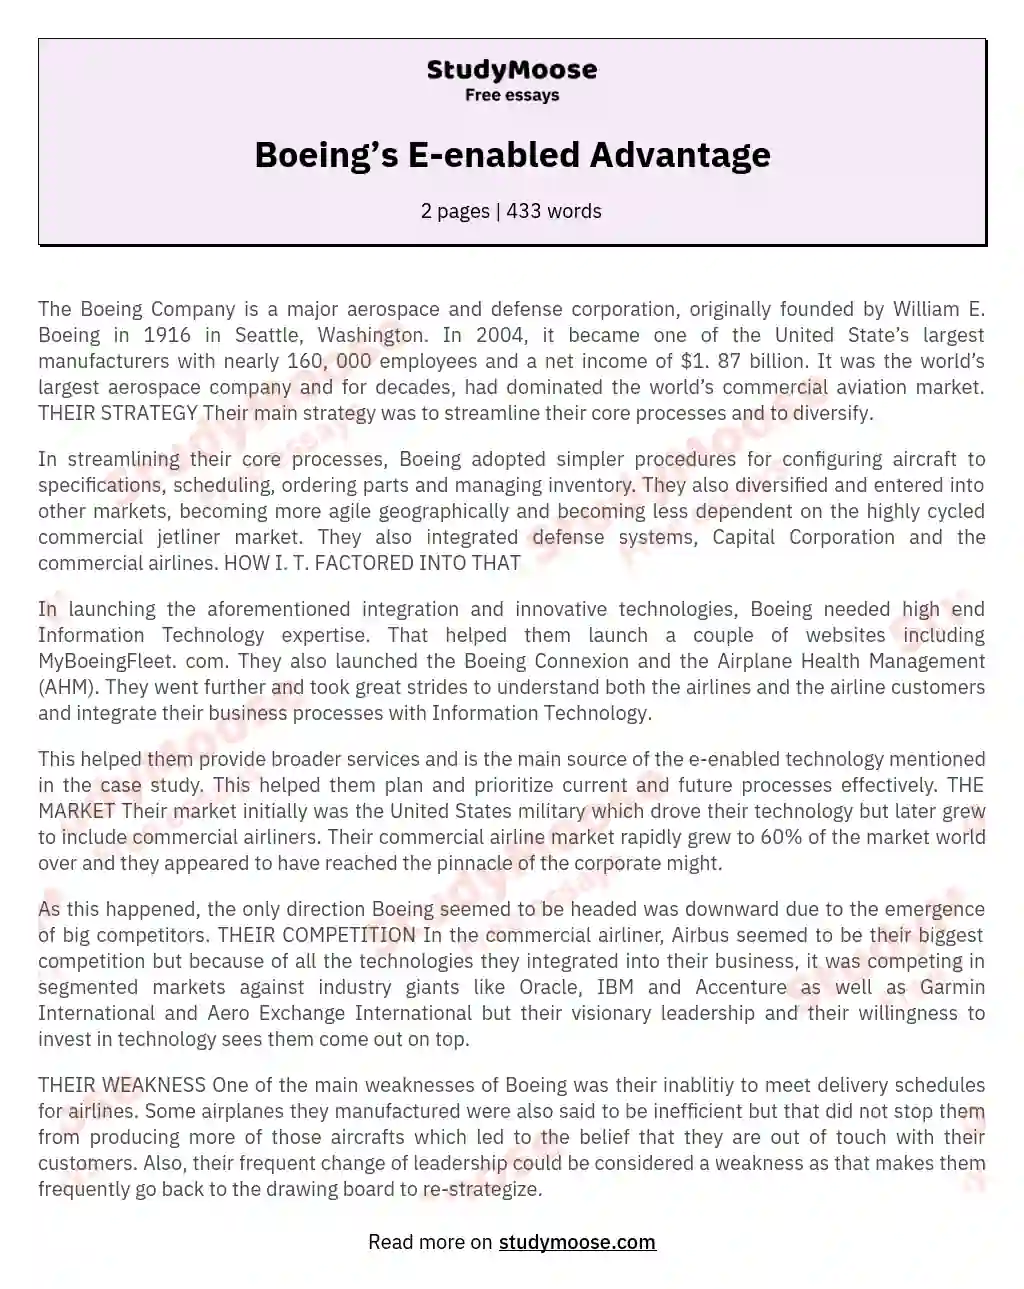 Boeing’s E-enabled Advantage essay